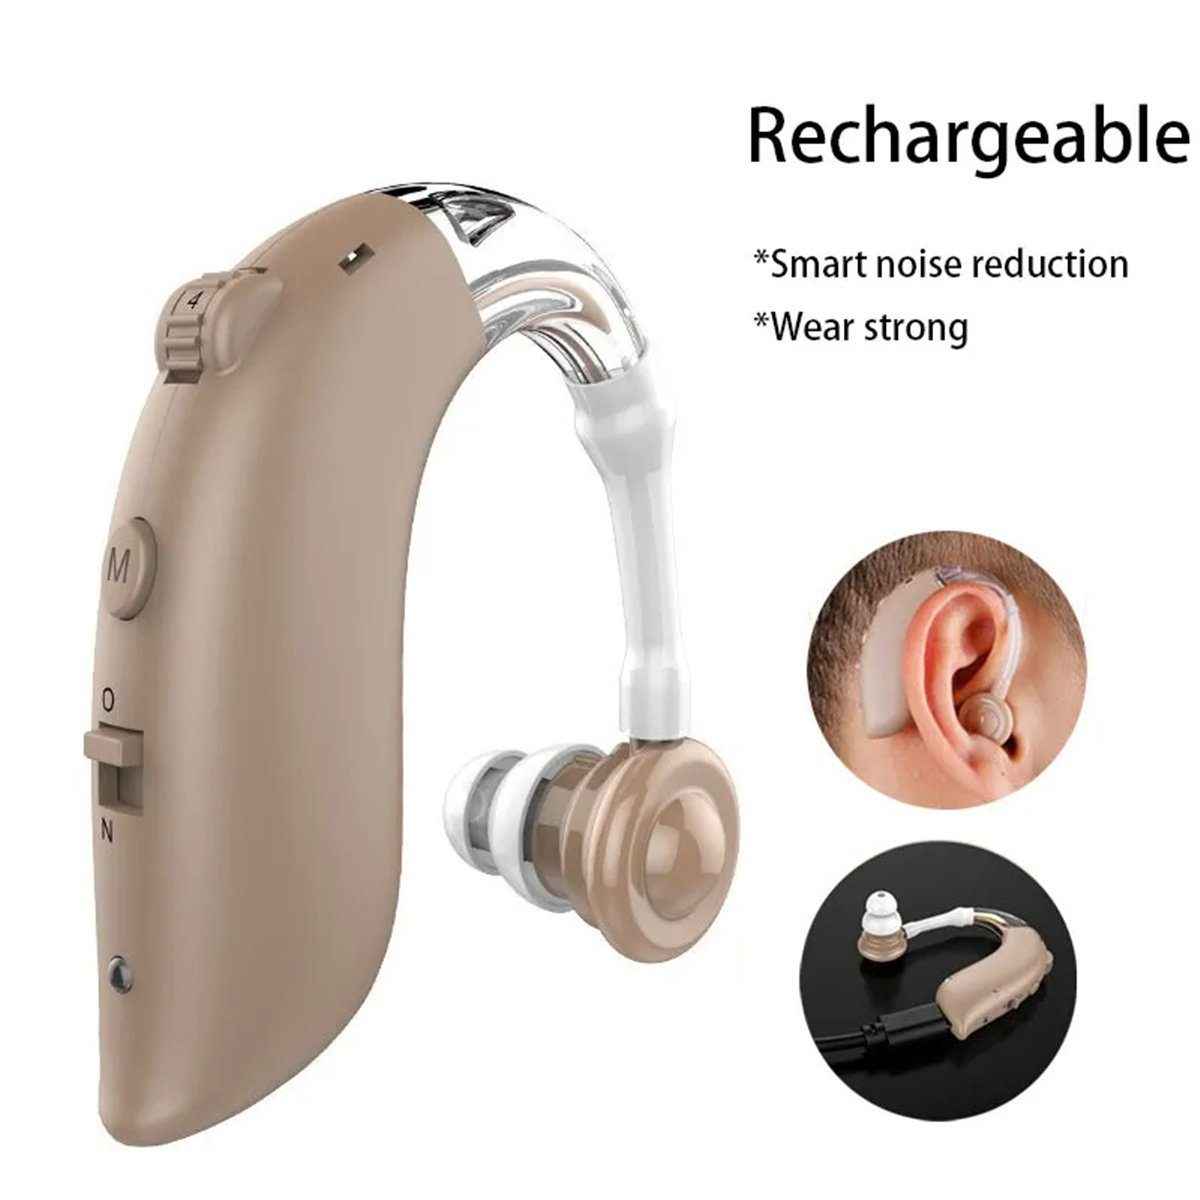 Hörgerät,Hörverstärker-Smart automatischer Hörverstärker Geräuschreduzierung Anpassung und Hörgerät mit SYNTEK